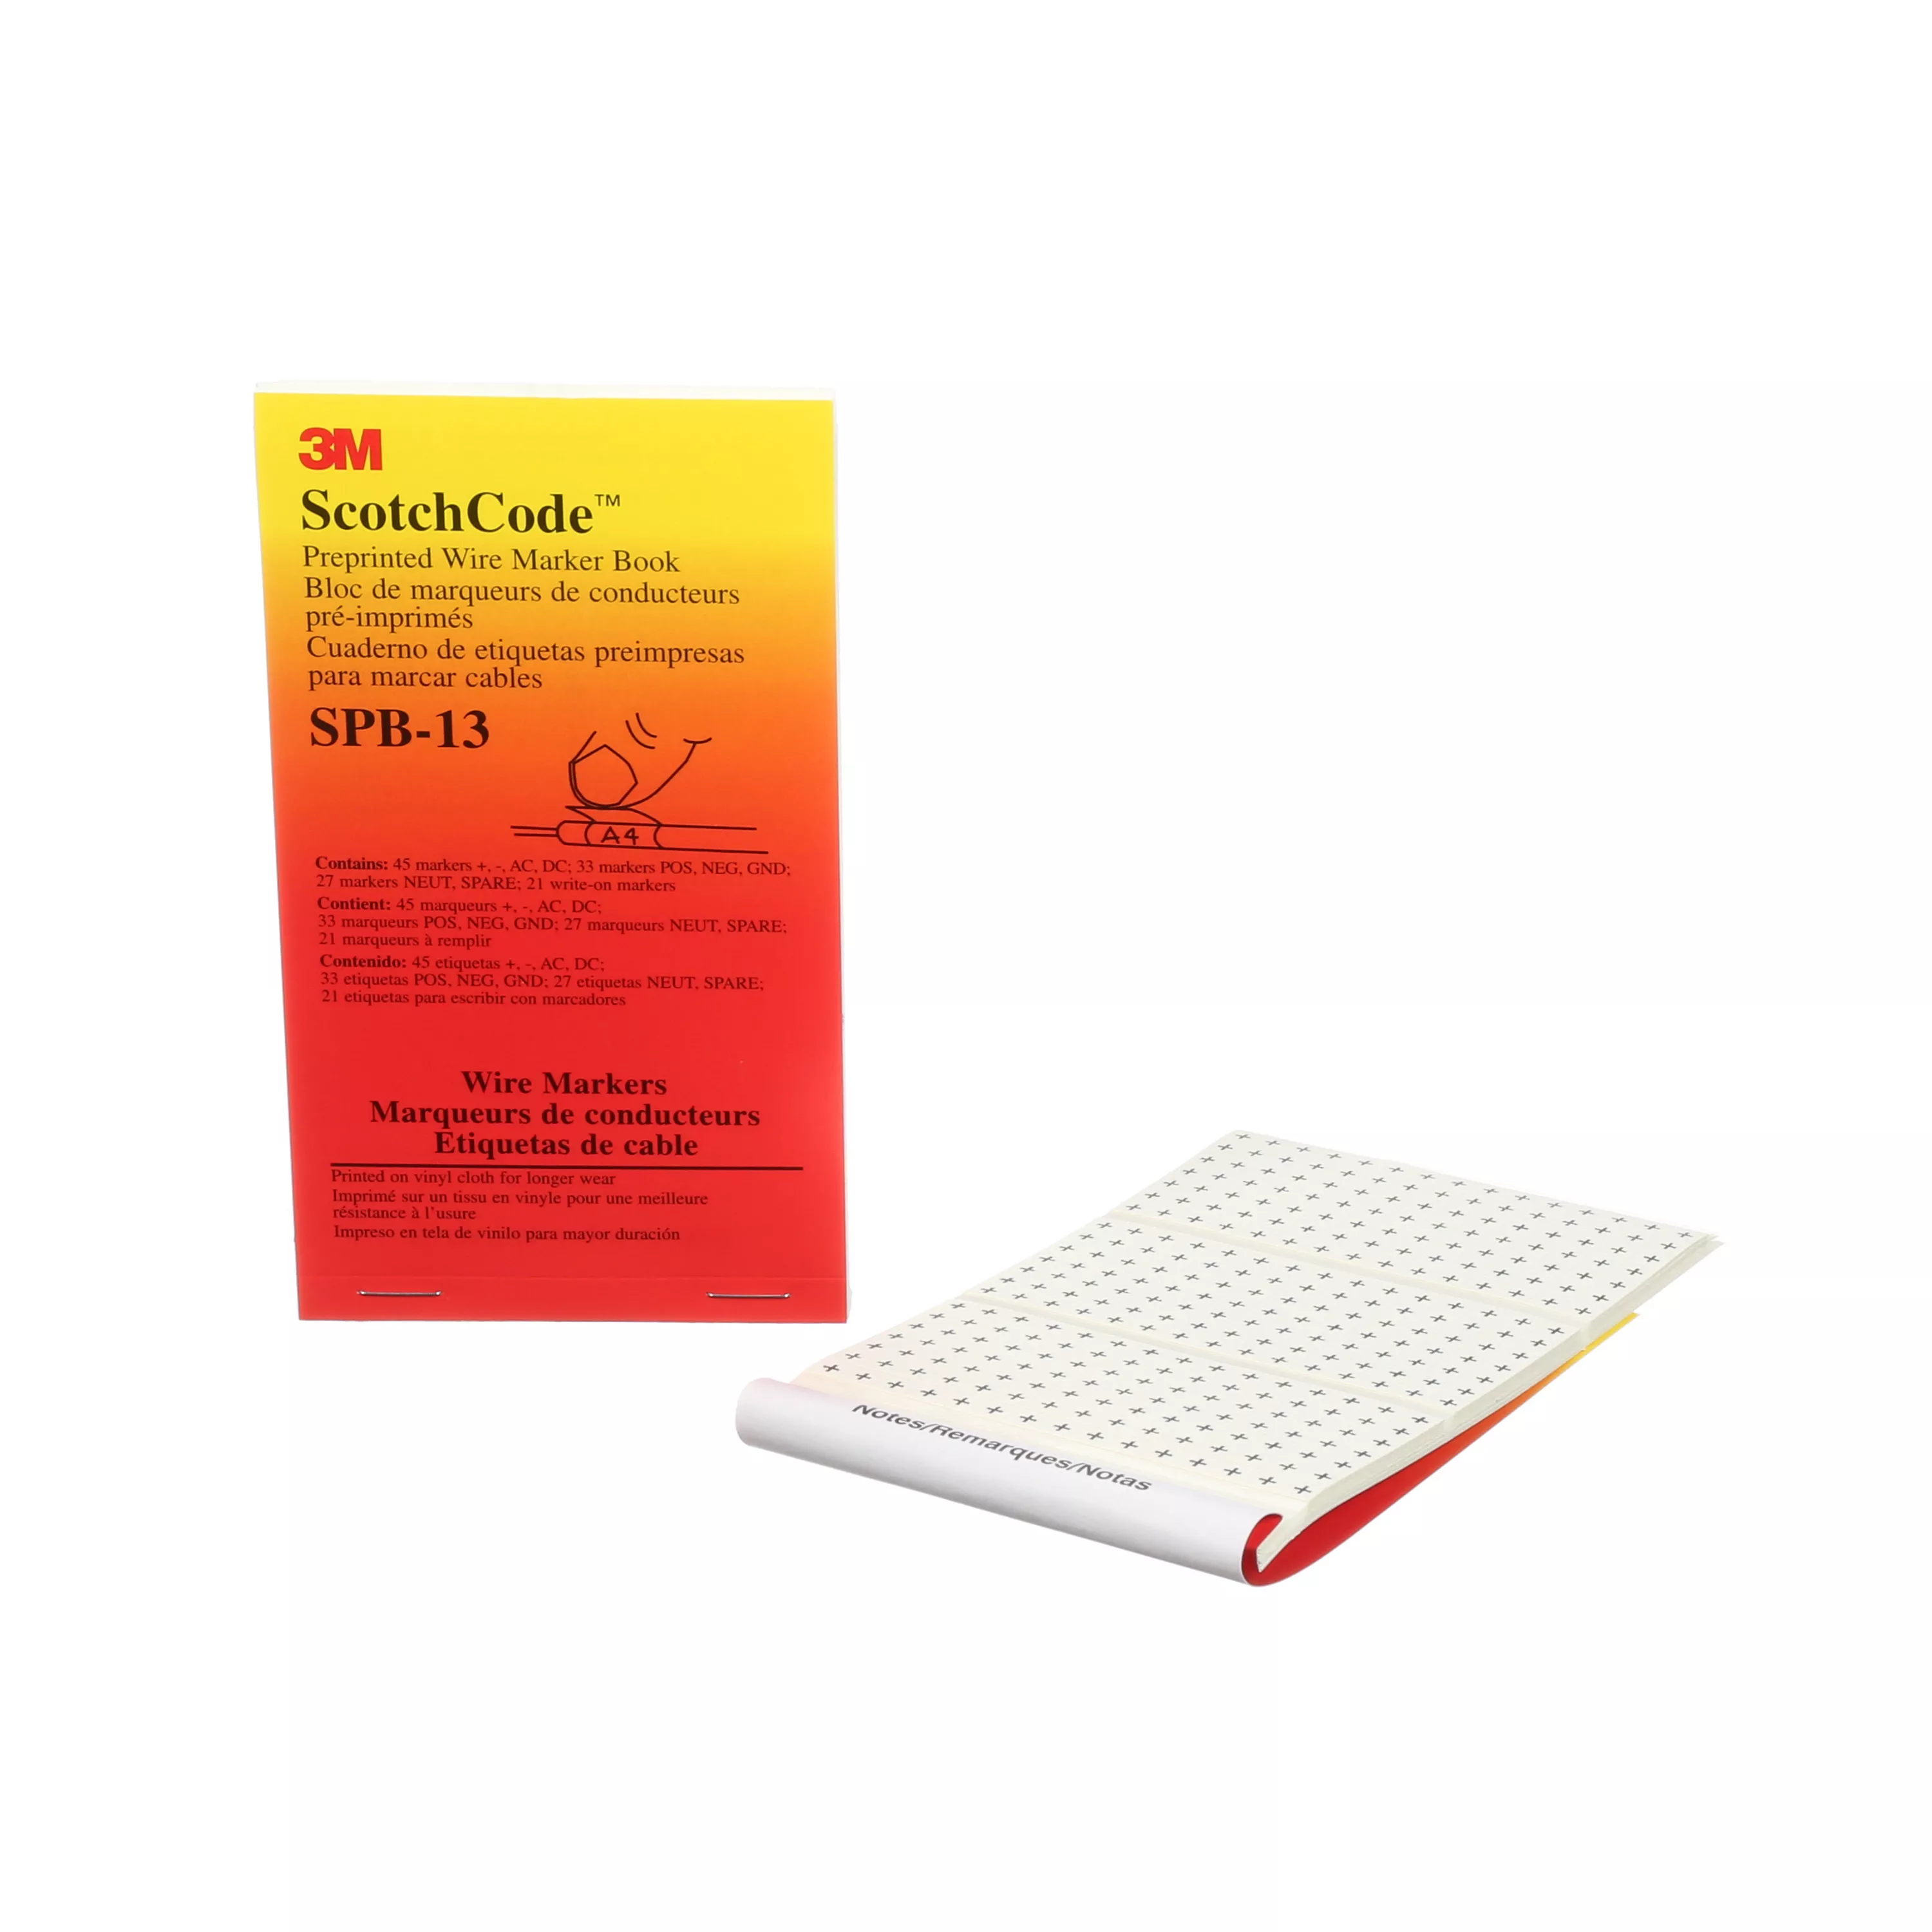 SKU 7000132486 | 3M™ ScotchCode™ Pre-Printed Wire Marker Book SPB-13